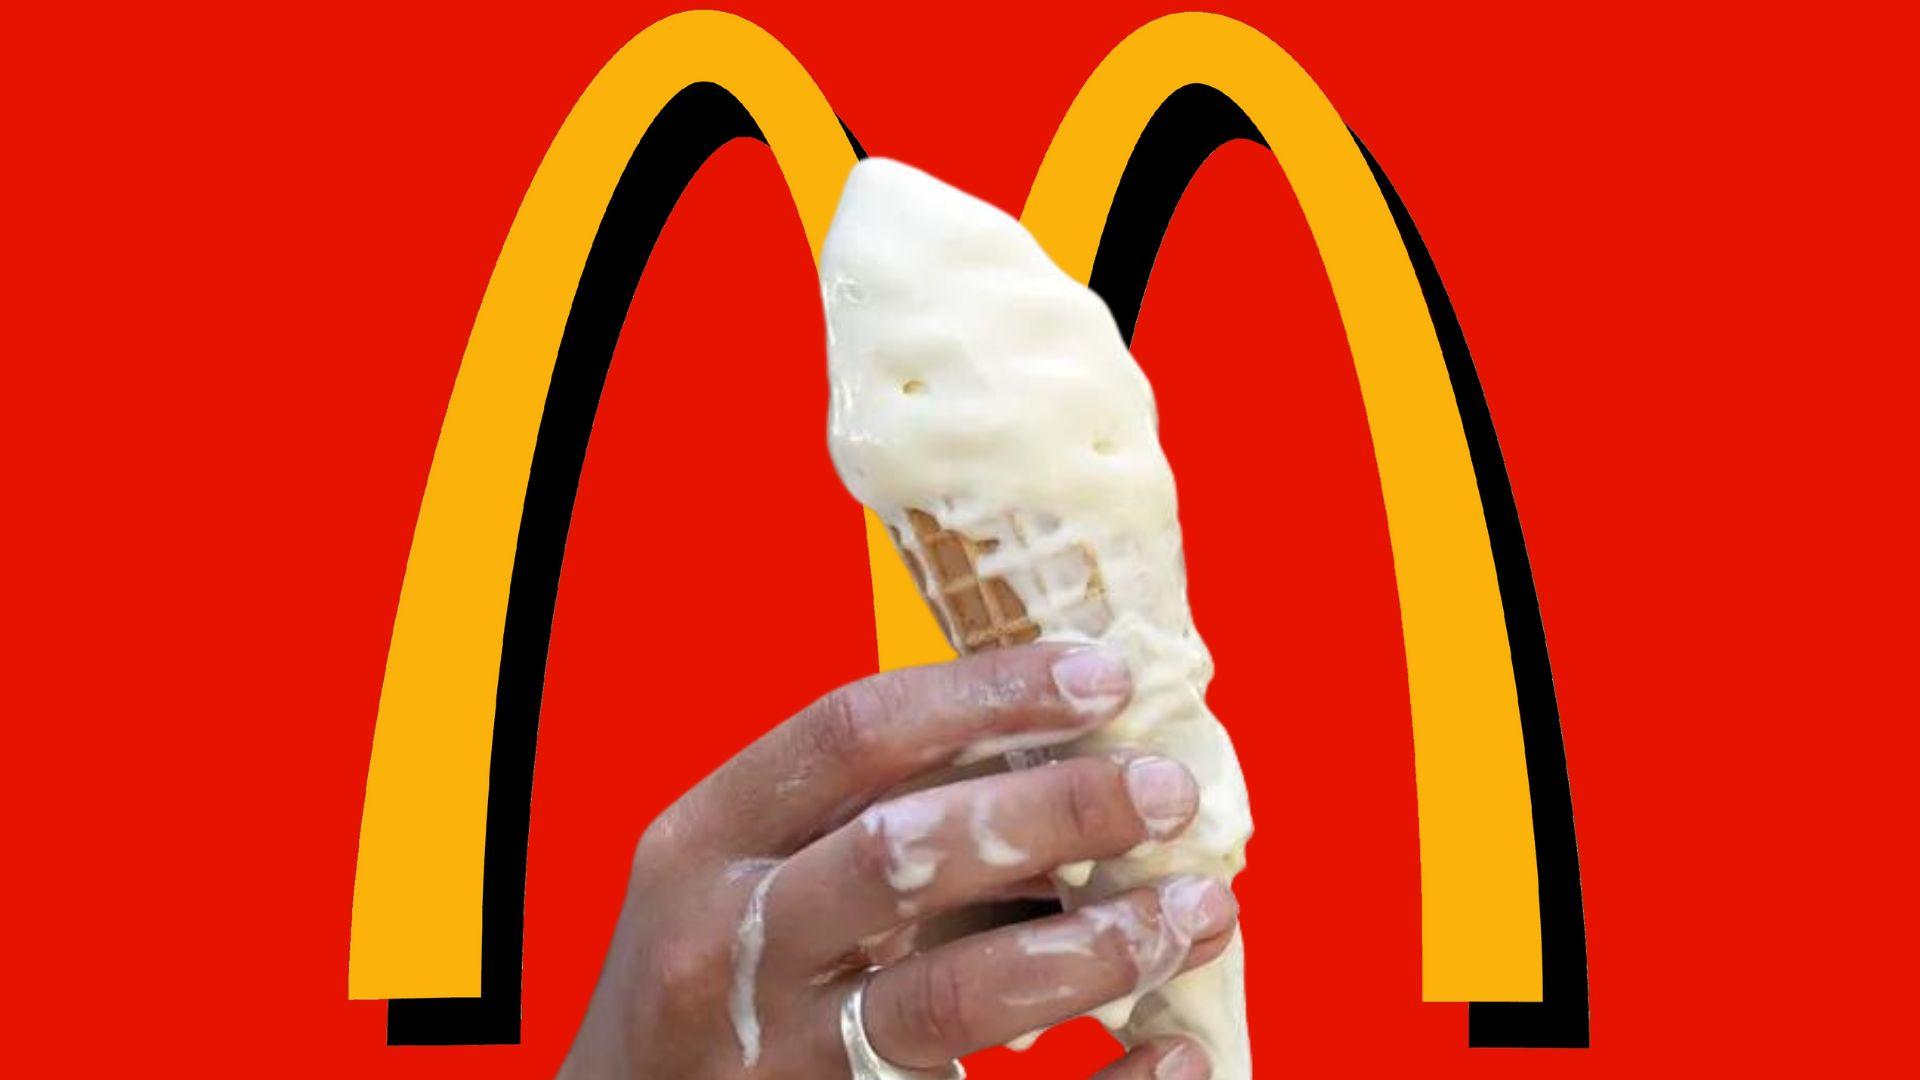 Mcdonalds logo and melted ice cream